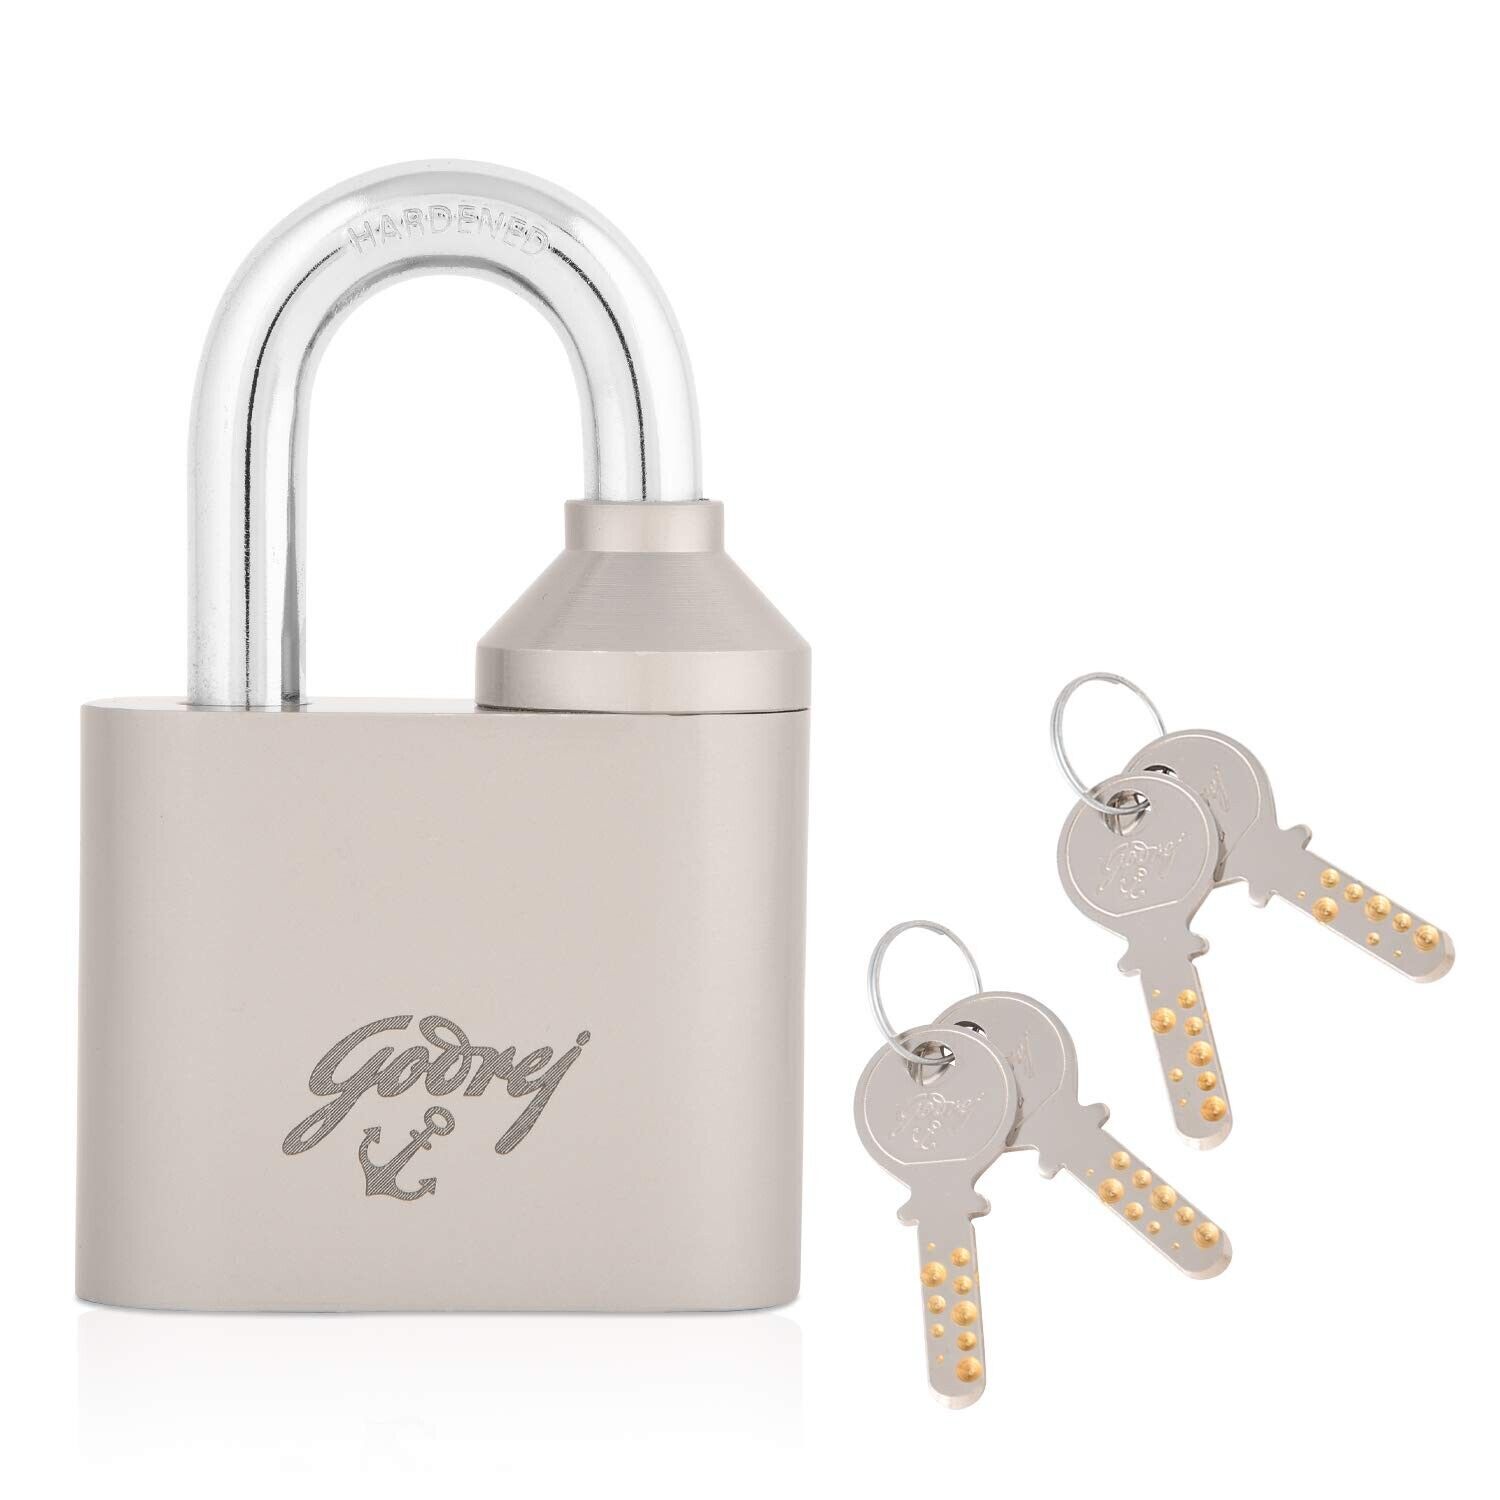 Godrej Dual Access Padlock with 2 Master Keys and 2 User Keys Polished(SILVER)